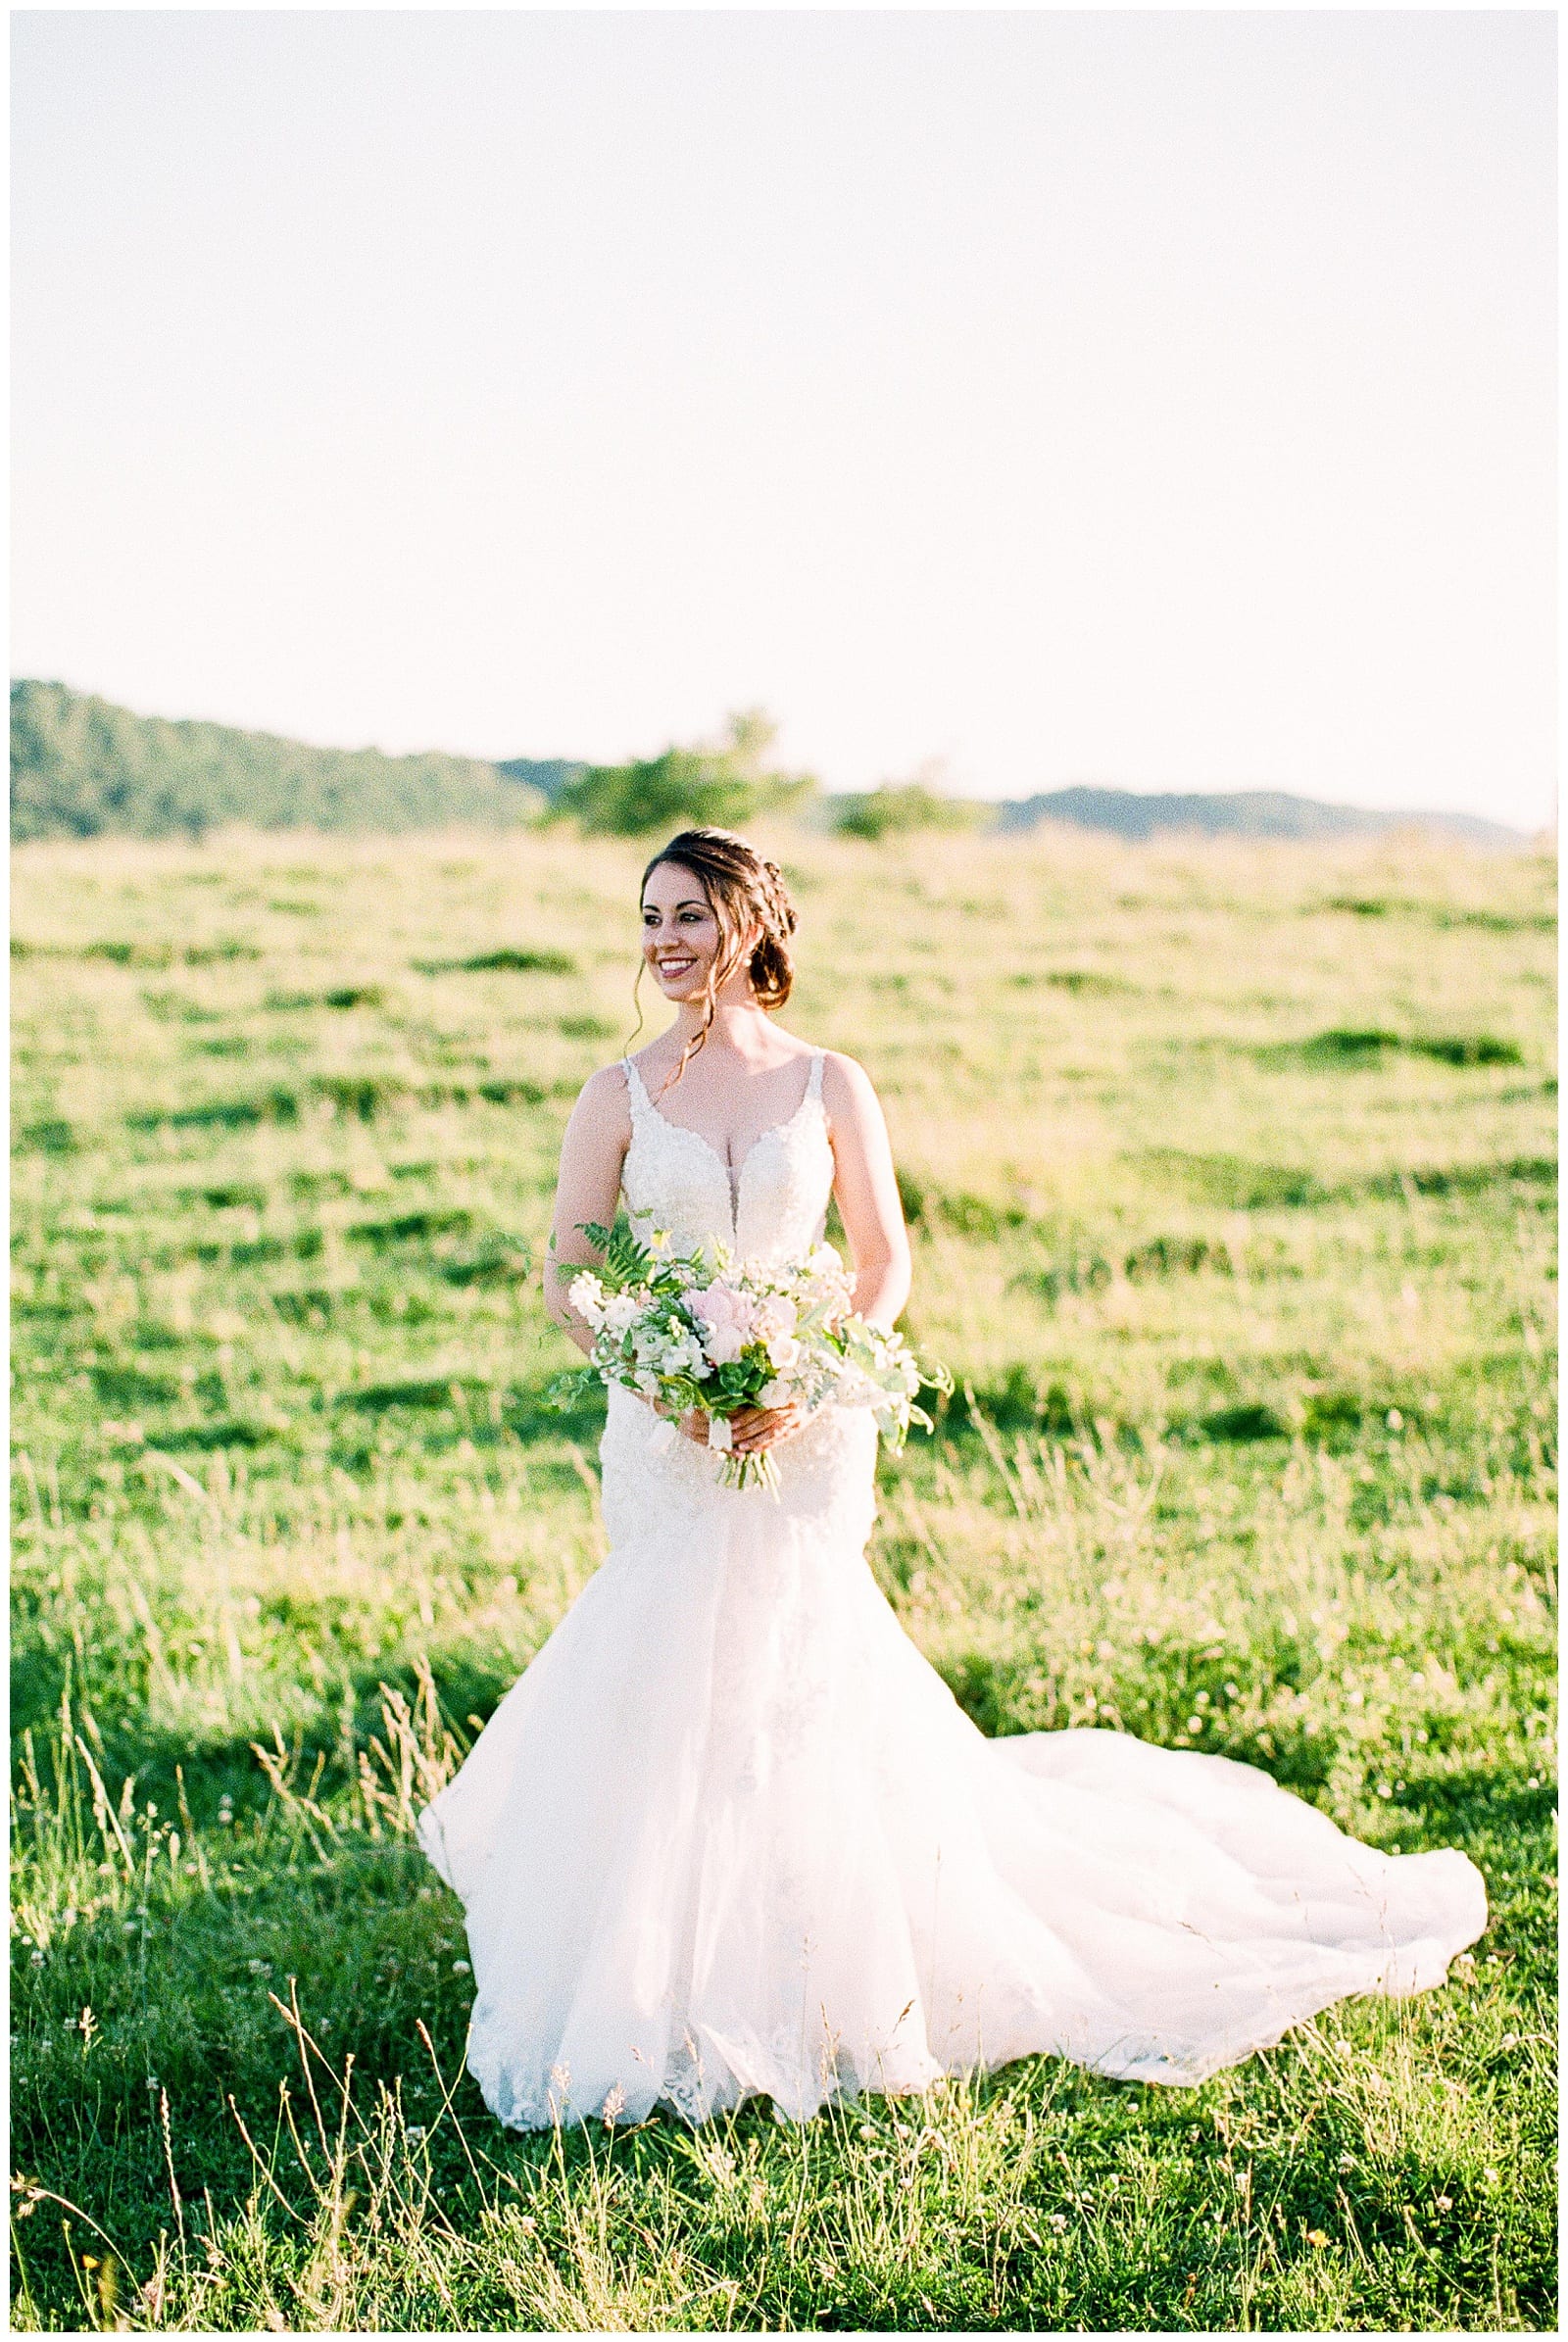 Danielle-Defayette-Photography-Middle-Fork-Barn-Abingdon-Wedding-2020_0015.jpg